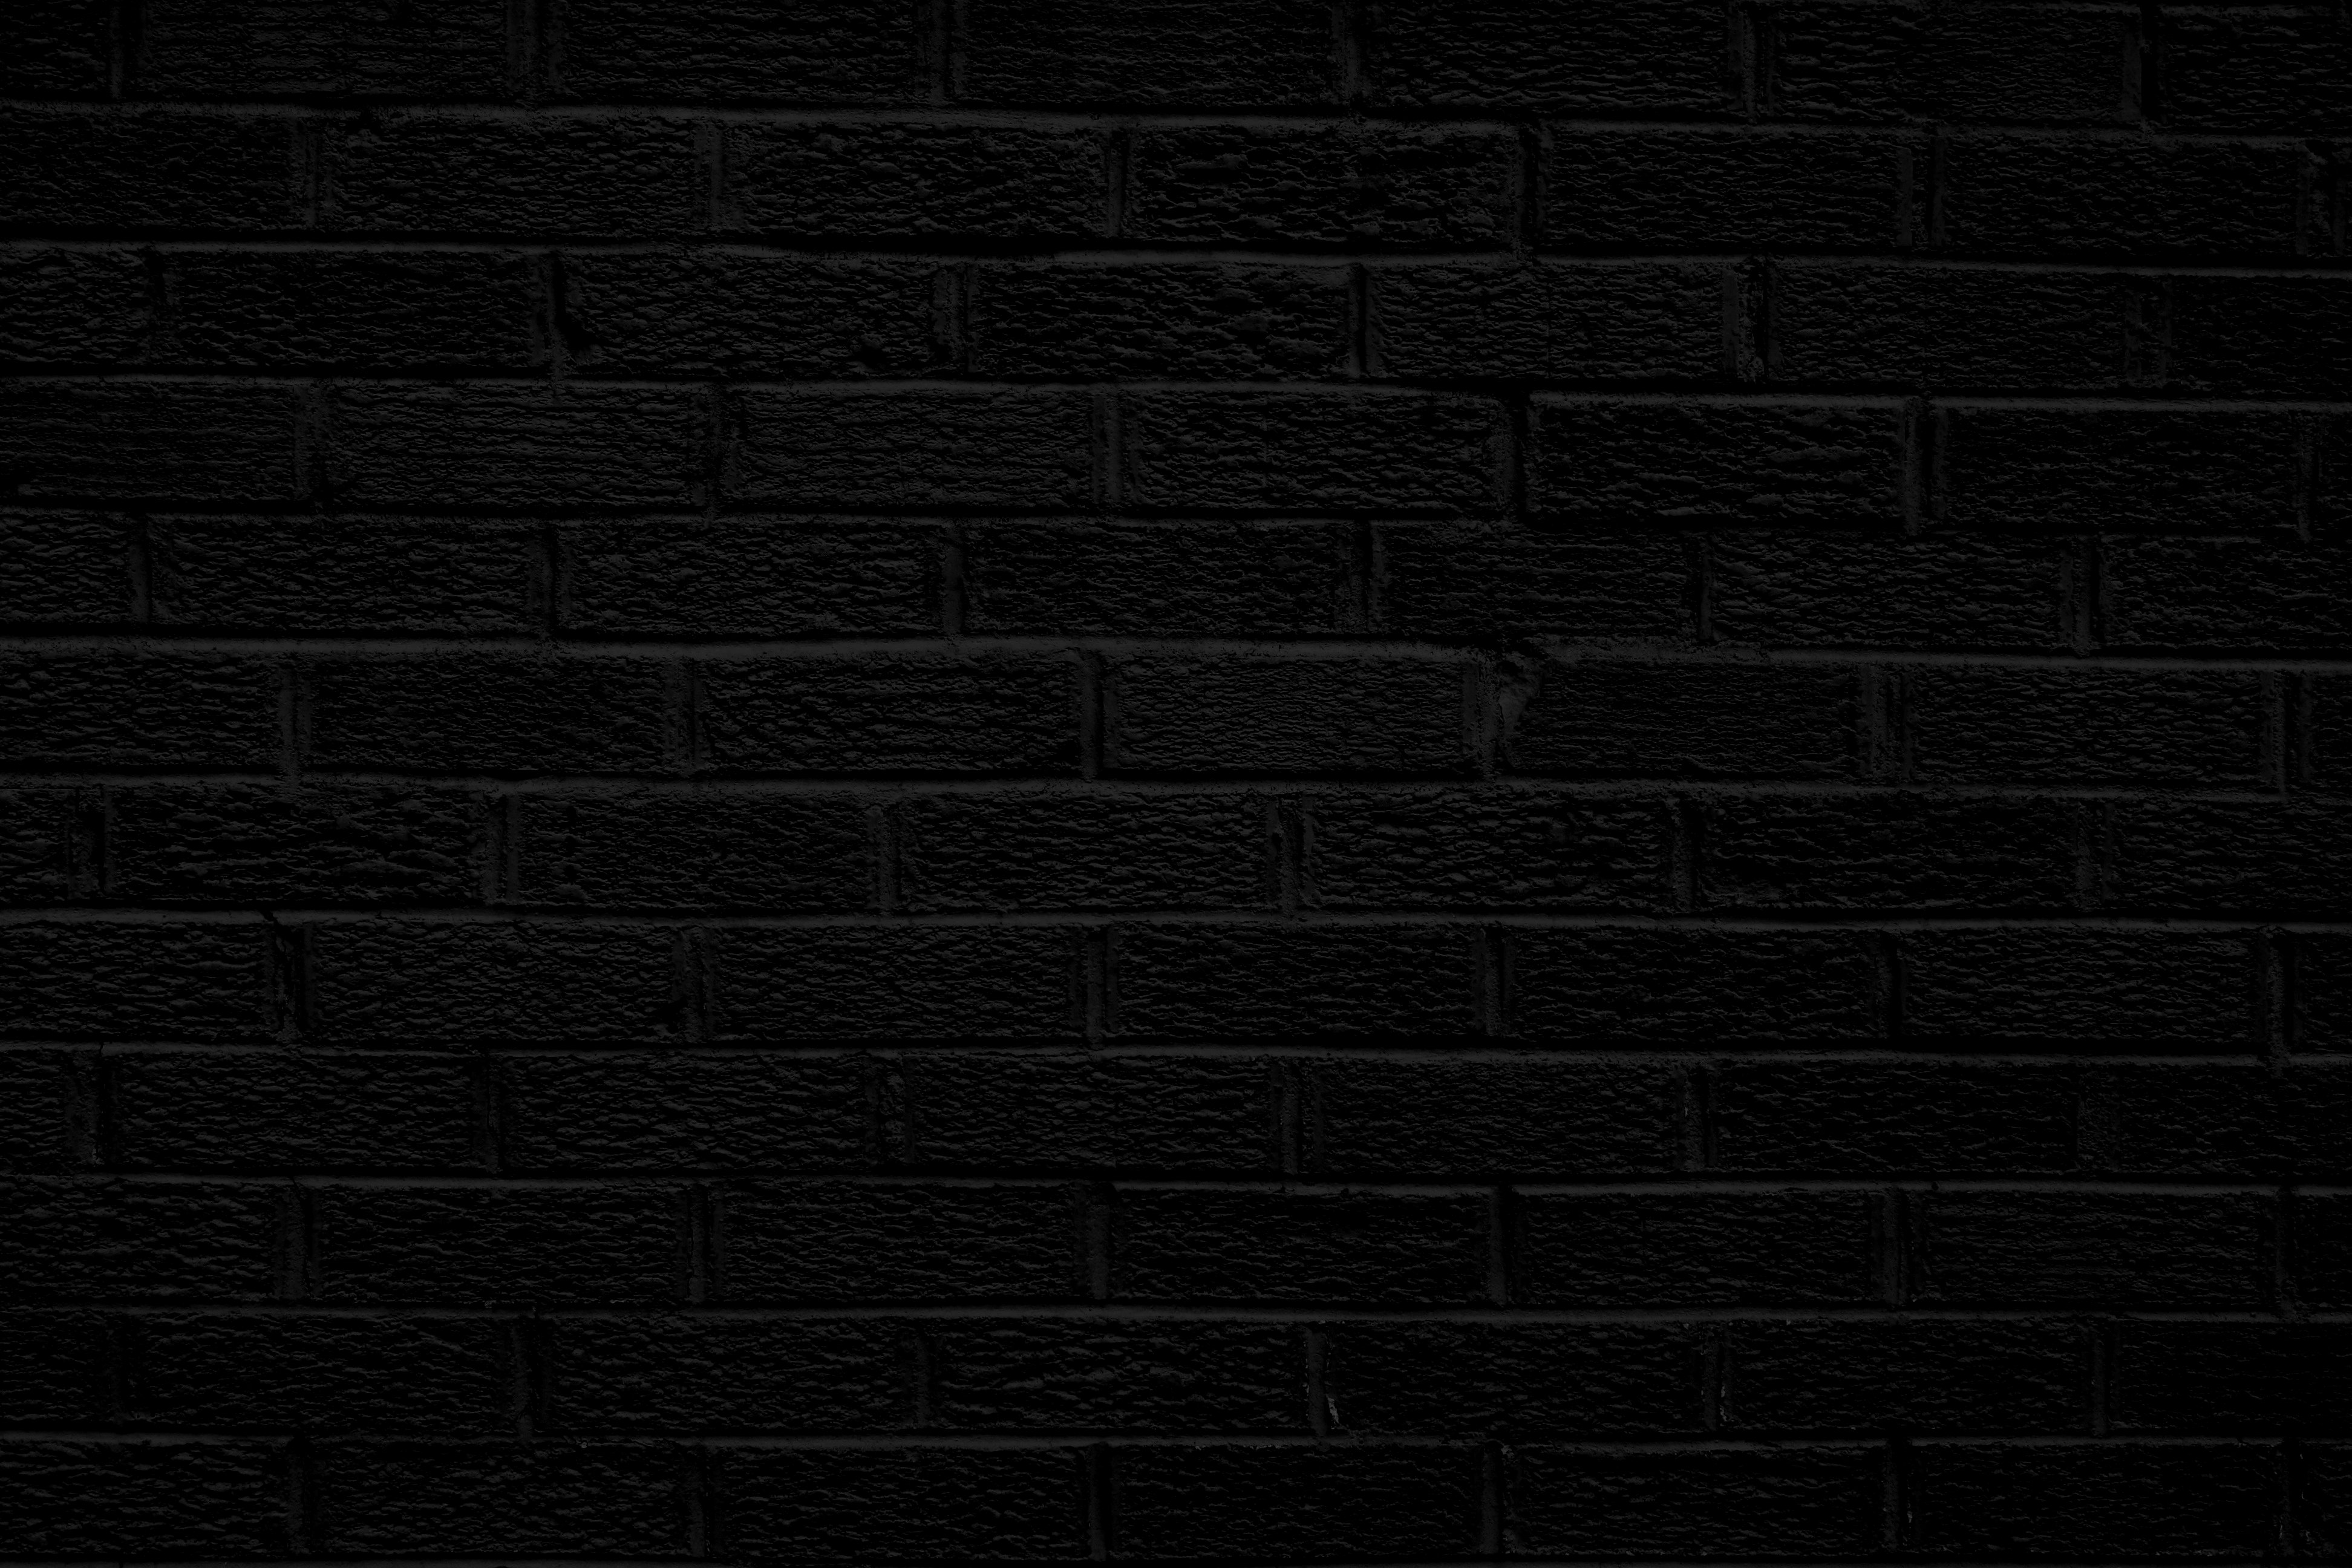 Black Brick Wall Texture Picture Free Photograph Photos Public